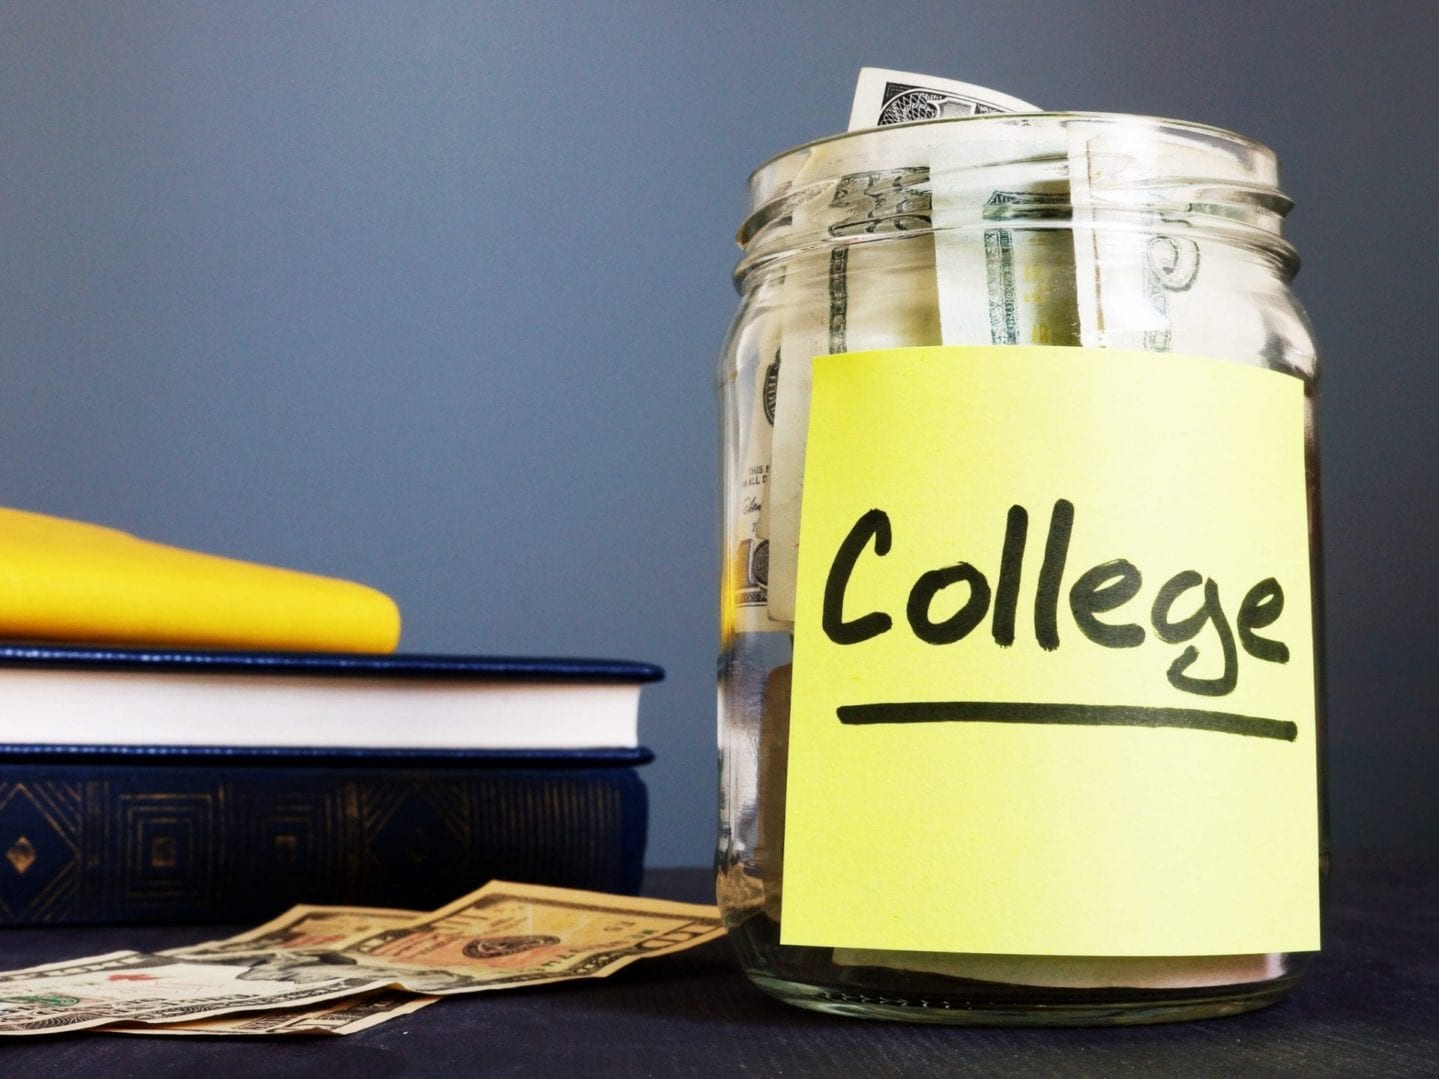 College fund written on a jar and money